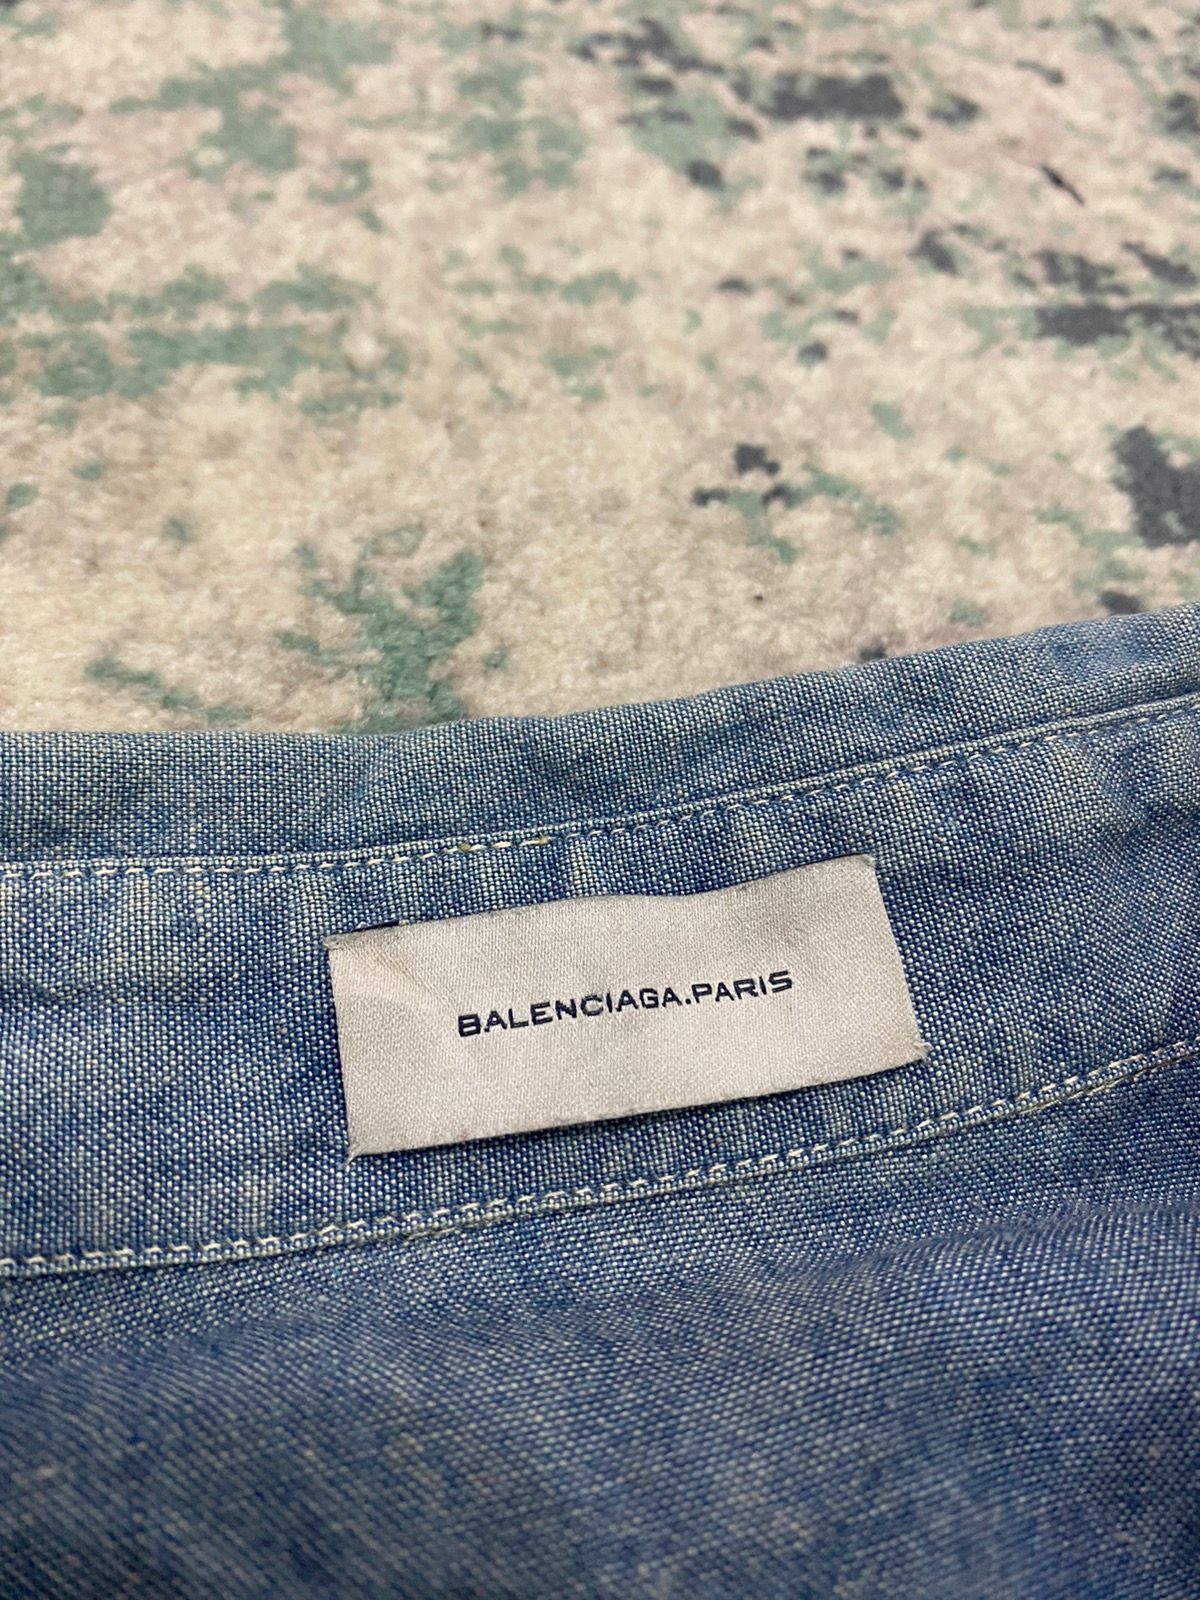 AW09 Balenciaga Paris Faded Hidden Pocket Denim Shirt - 2